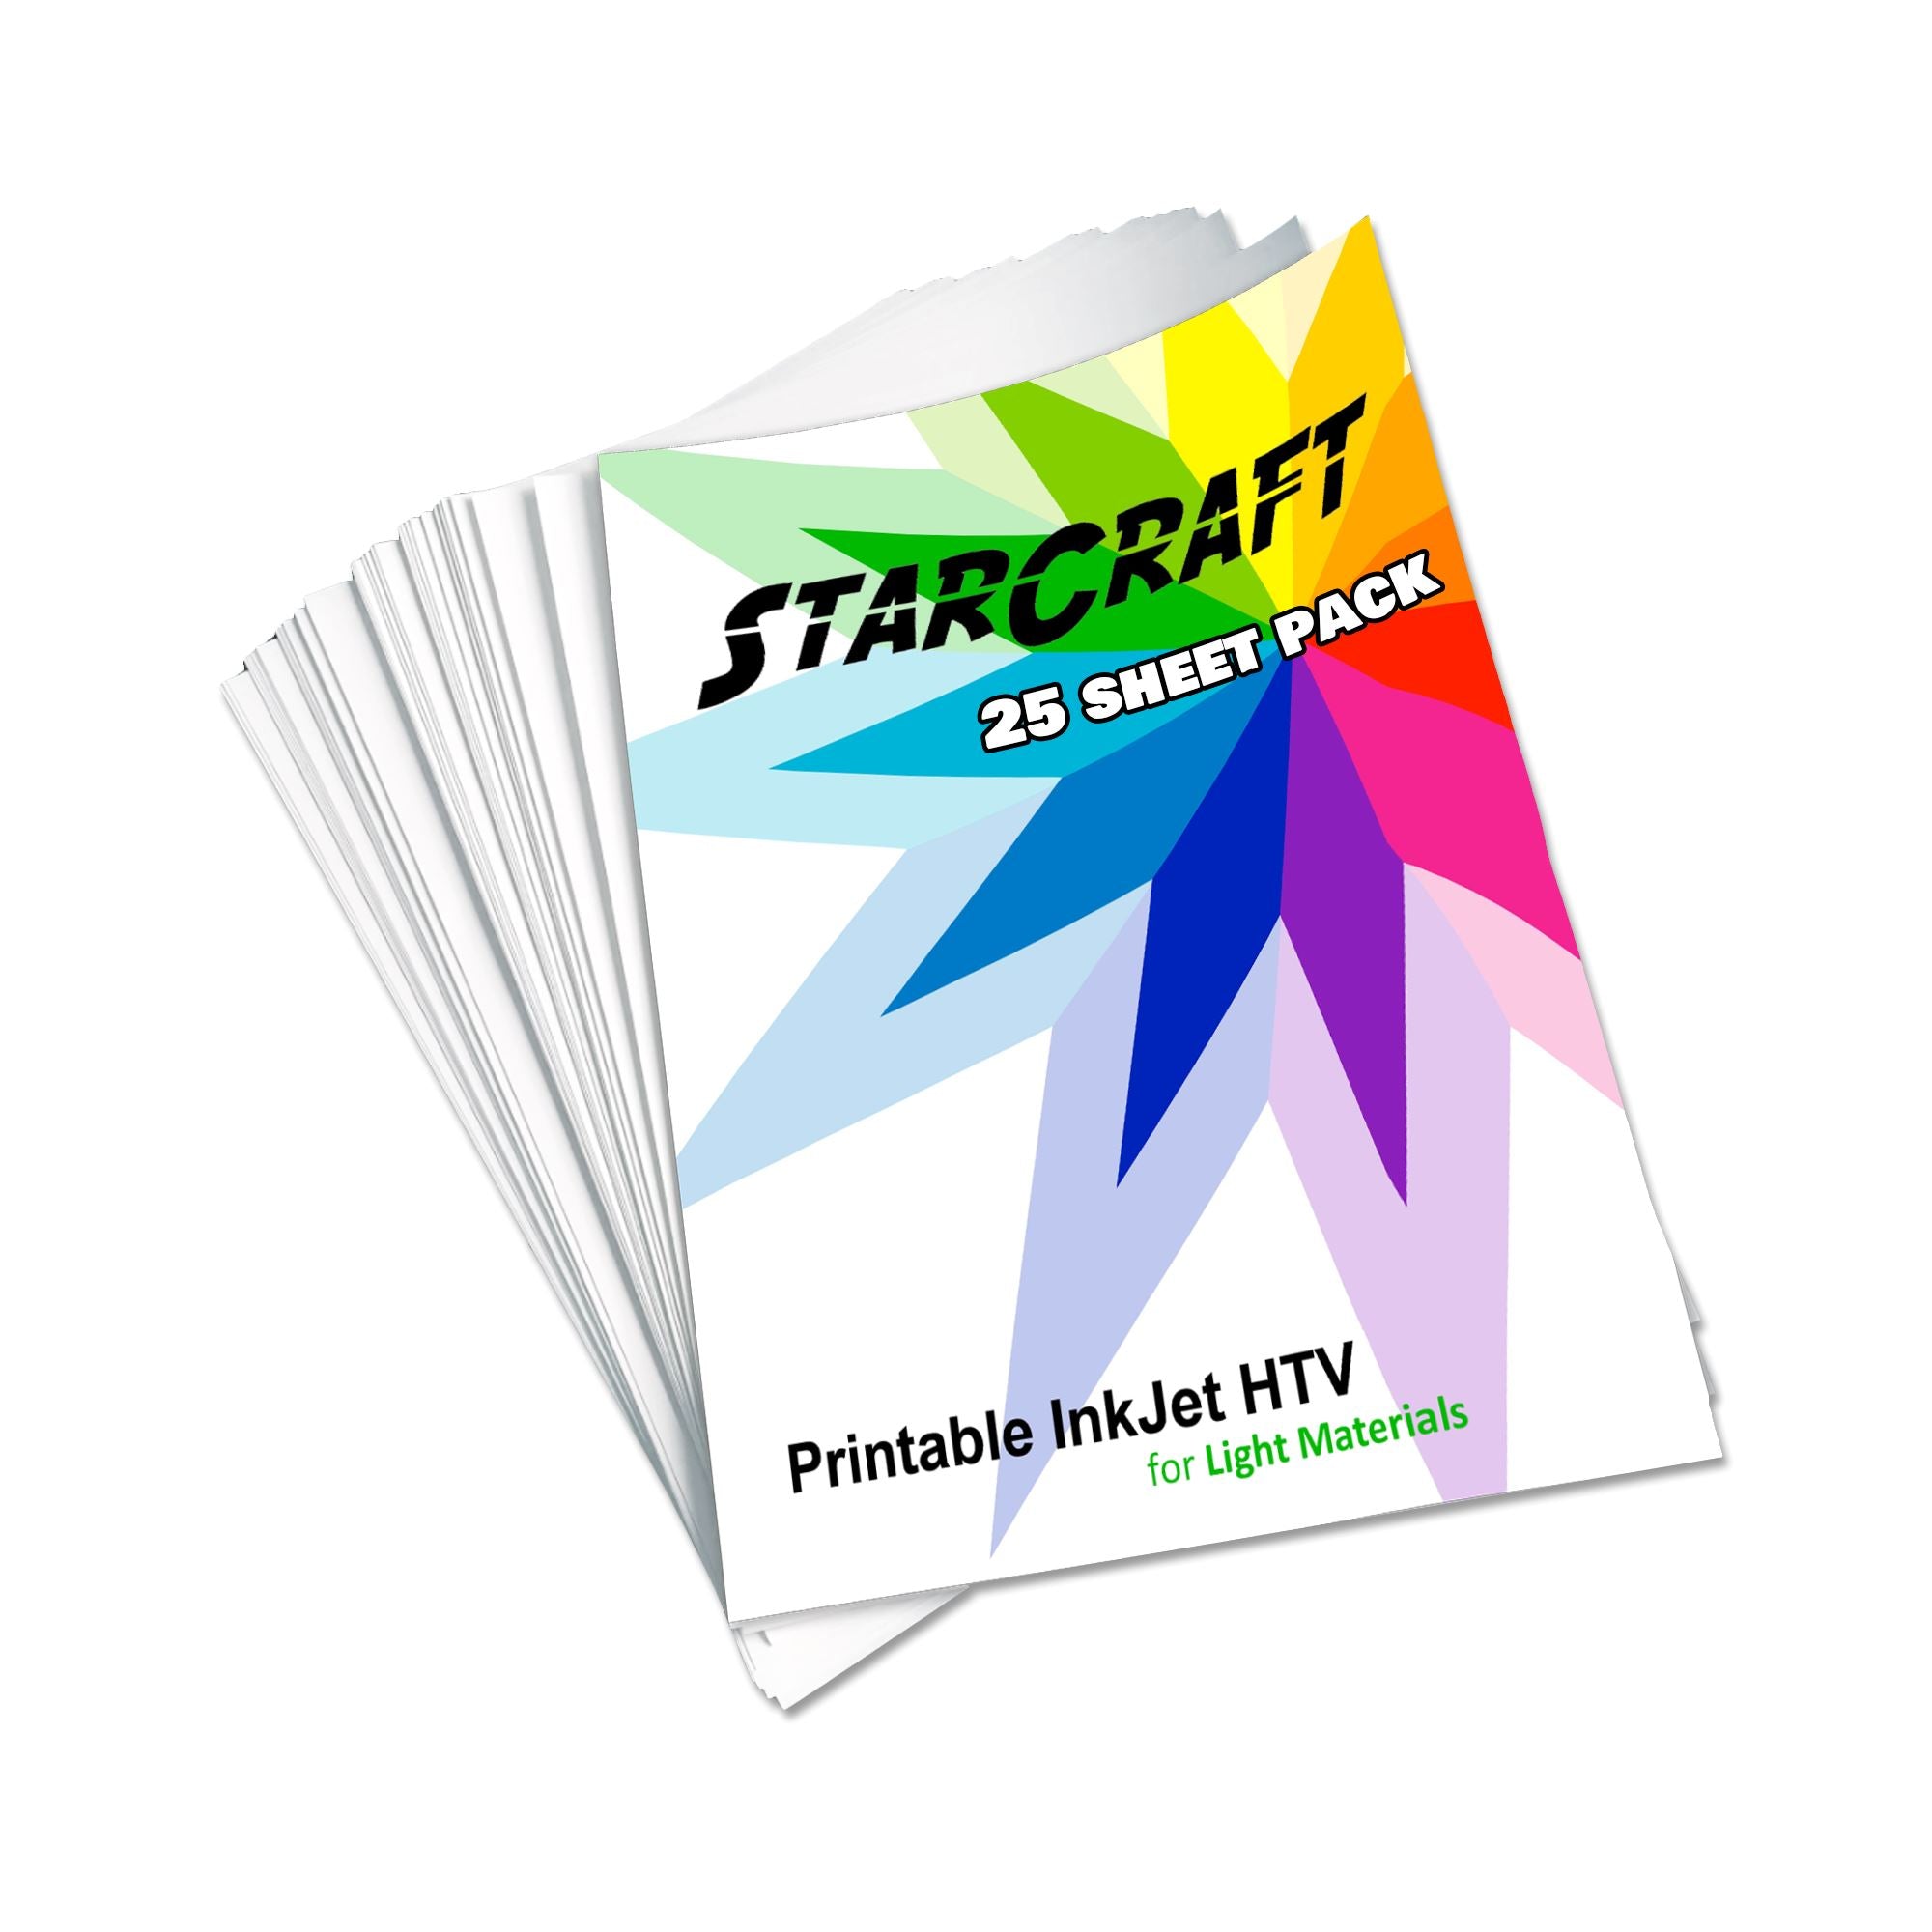 Starcraft Inkjet Printable Heat Transfer 25 Sheet Pack - Light Materials